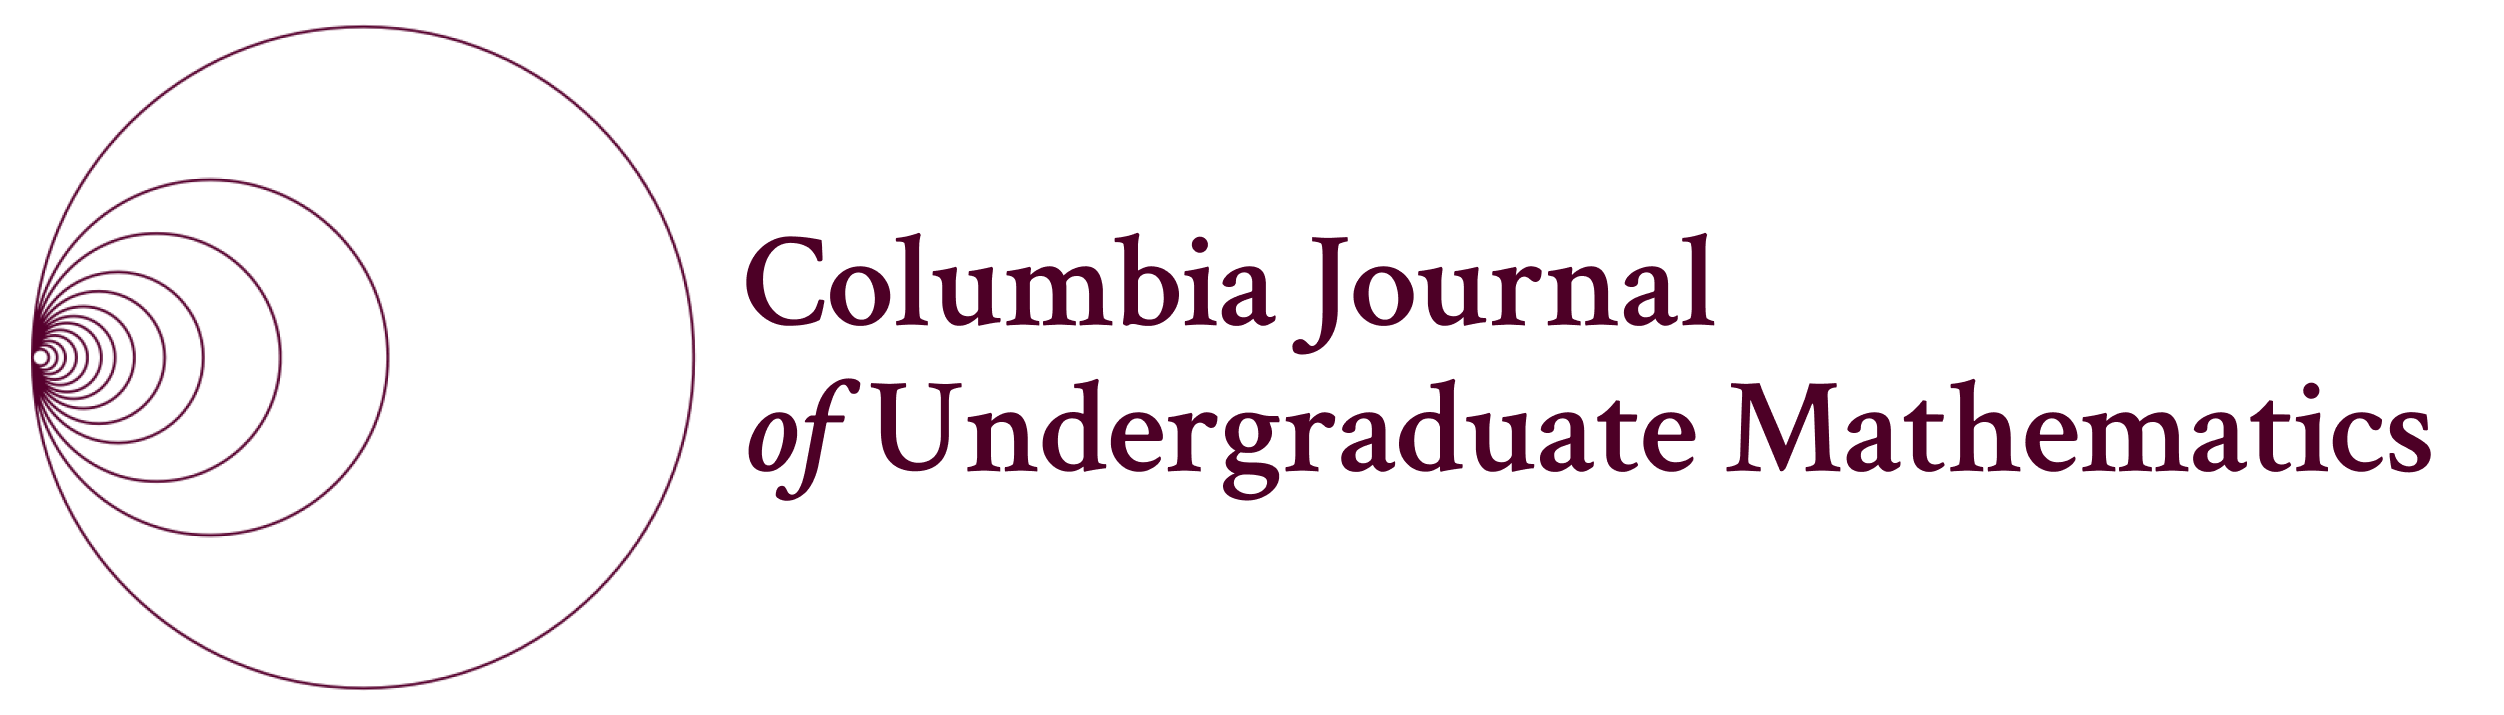 Columbia Journal of Undergraduate Mathematics